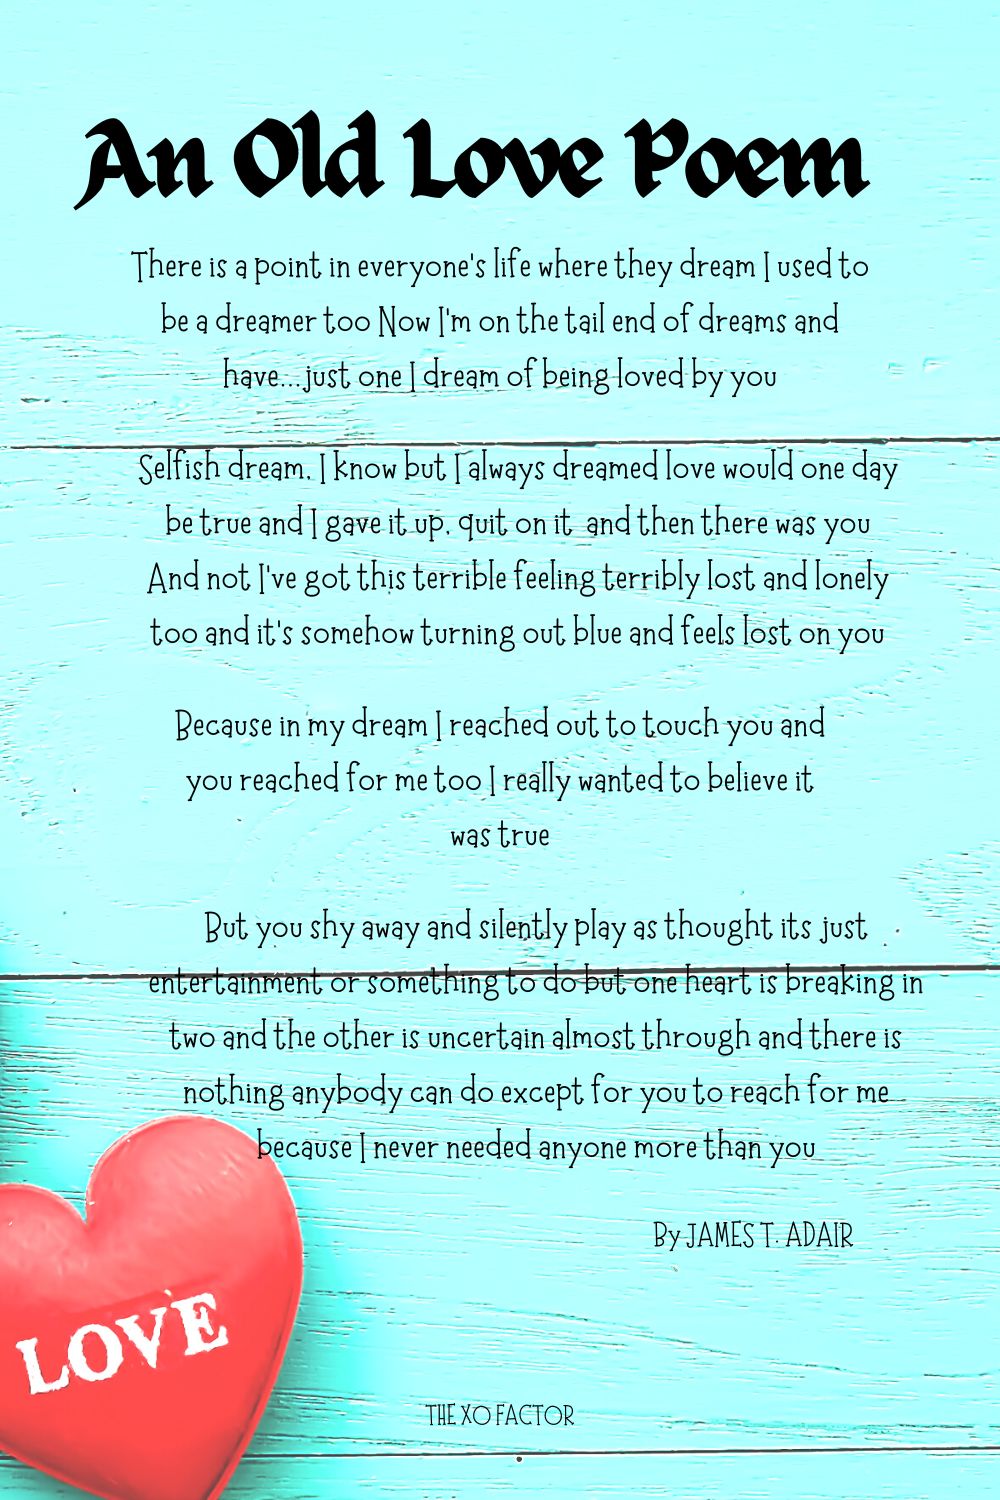 An Old Love Poem By JAMES T. ADAIR